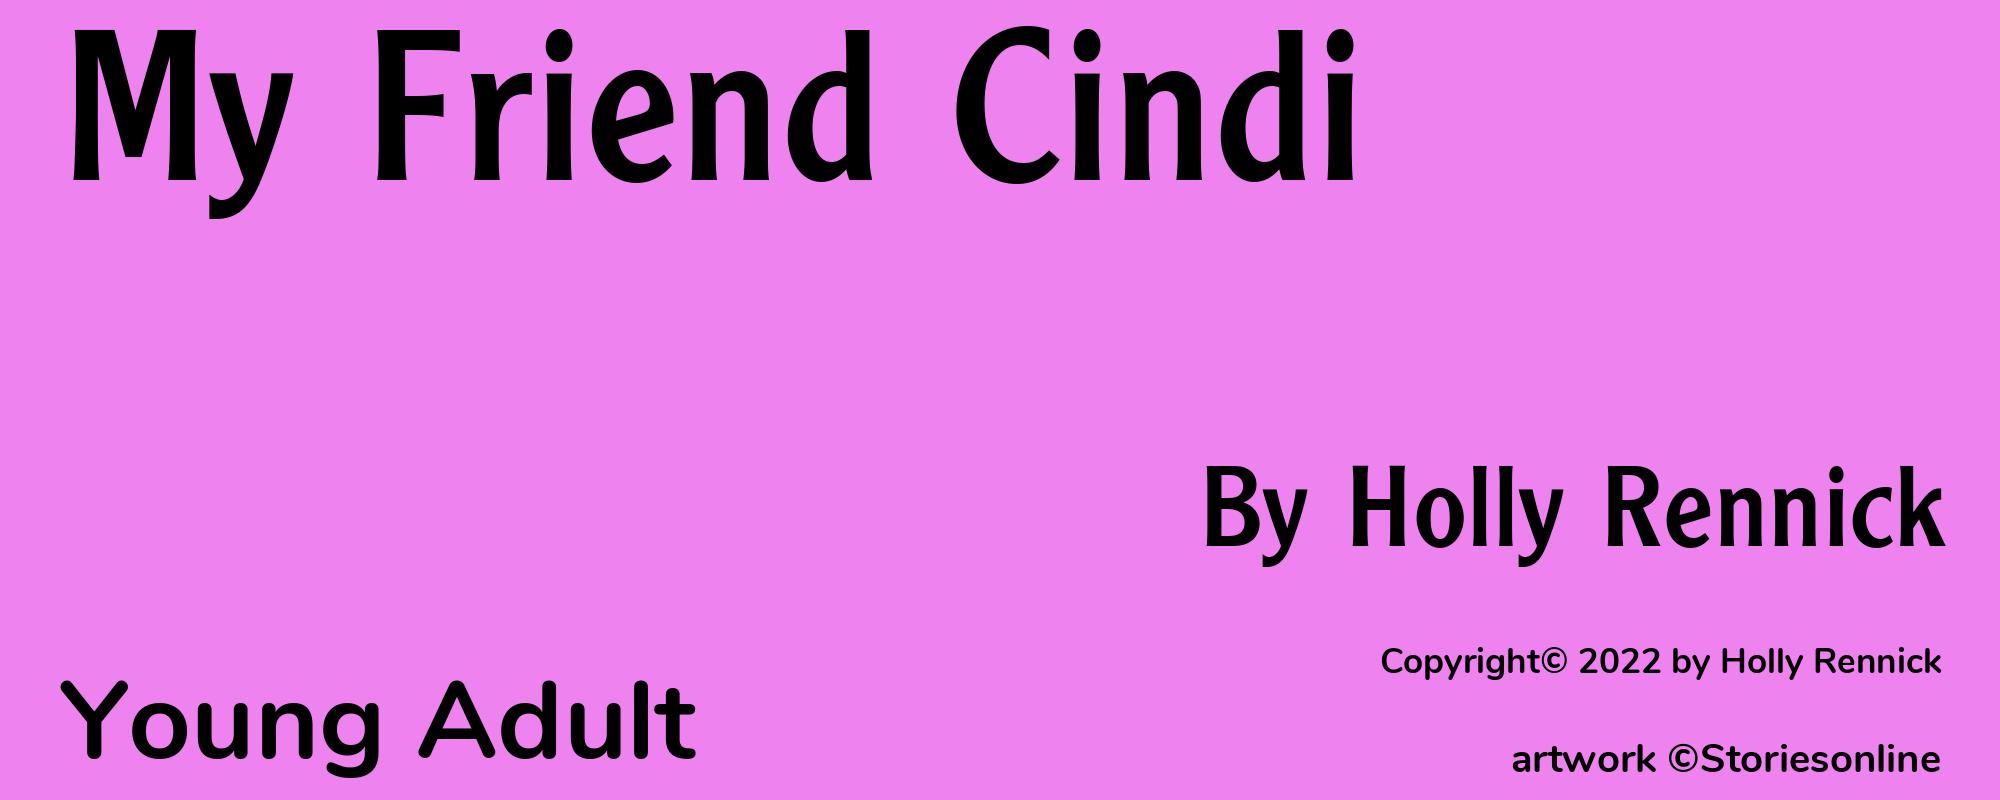 My Friend Cindi - Cover